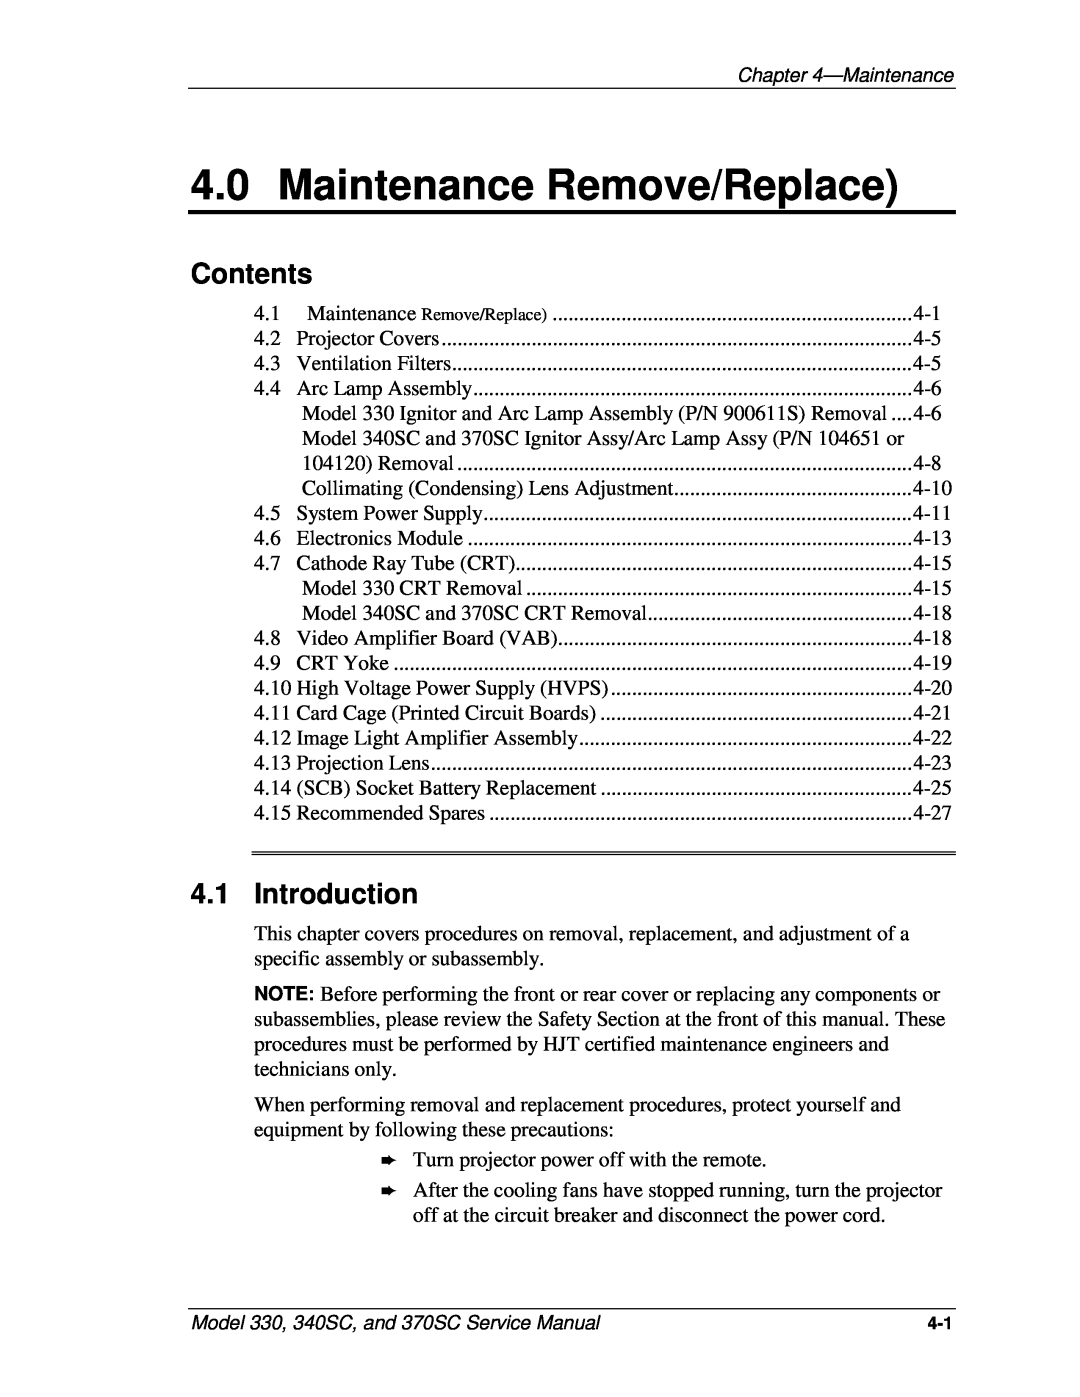 JVC 370 SC, 340 SC Maintenance Remove/Replace, Introduction, Contents, Model 330, 340SC, and 370SC Service Manual 